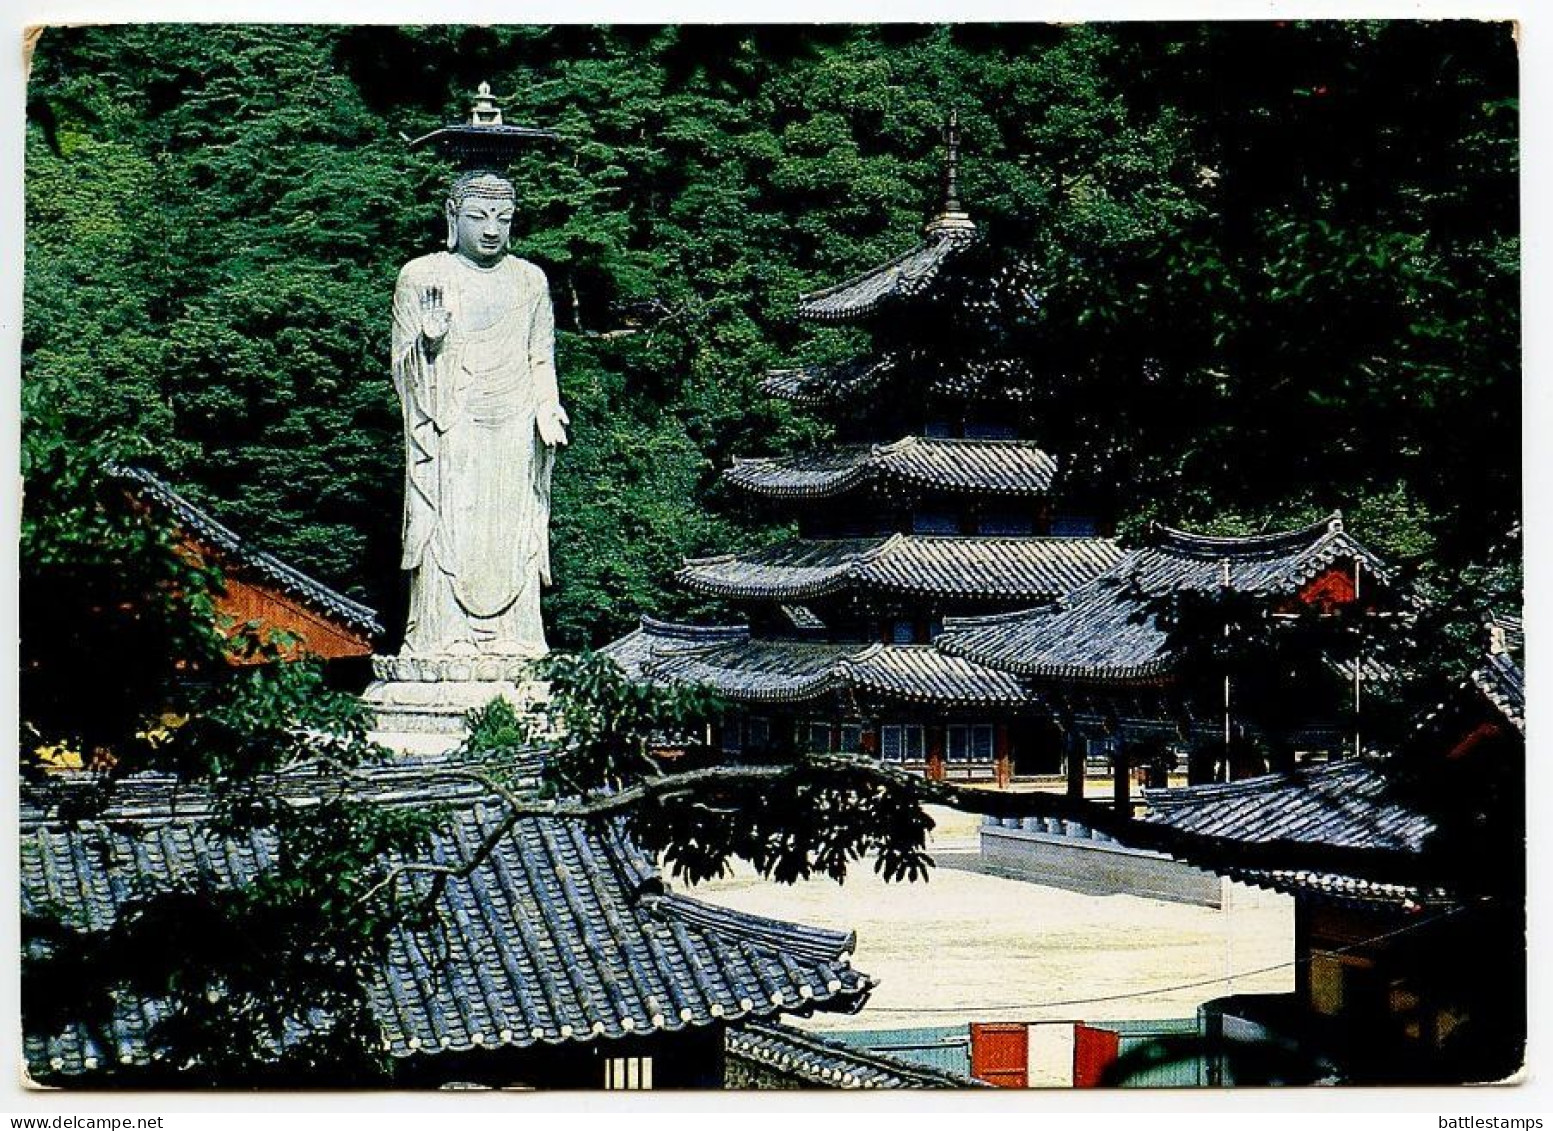 Korea, South 1985 Postcard Standing Buddha At Popchu-sa Temple; 80w. Warrior Jug & 300w. Ahn Chang-ho - Corée Du Sud